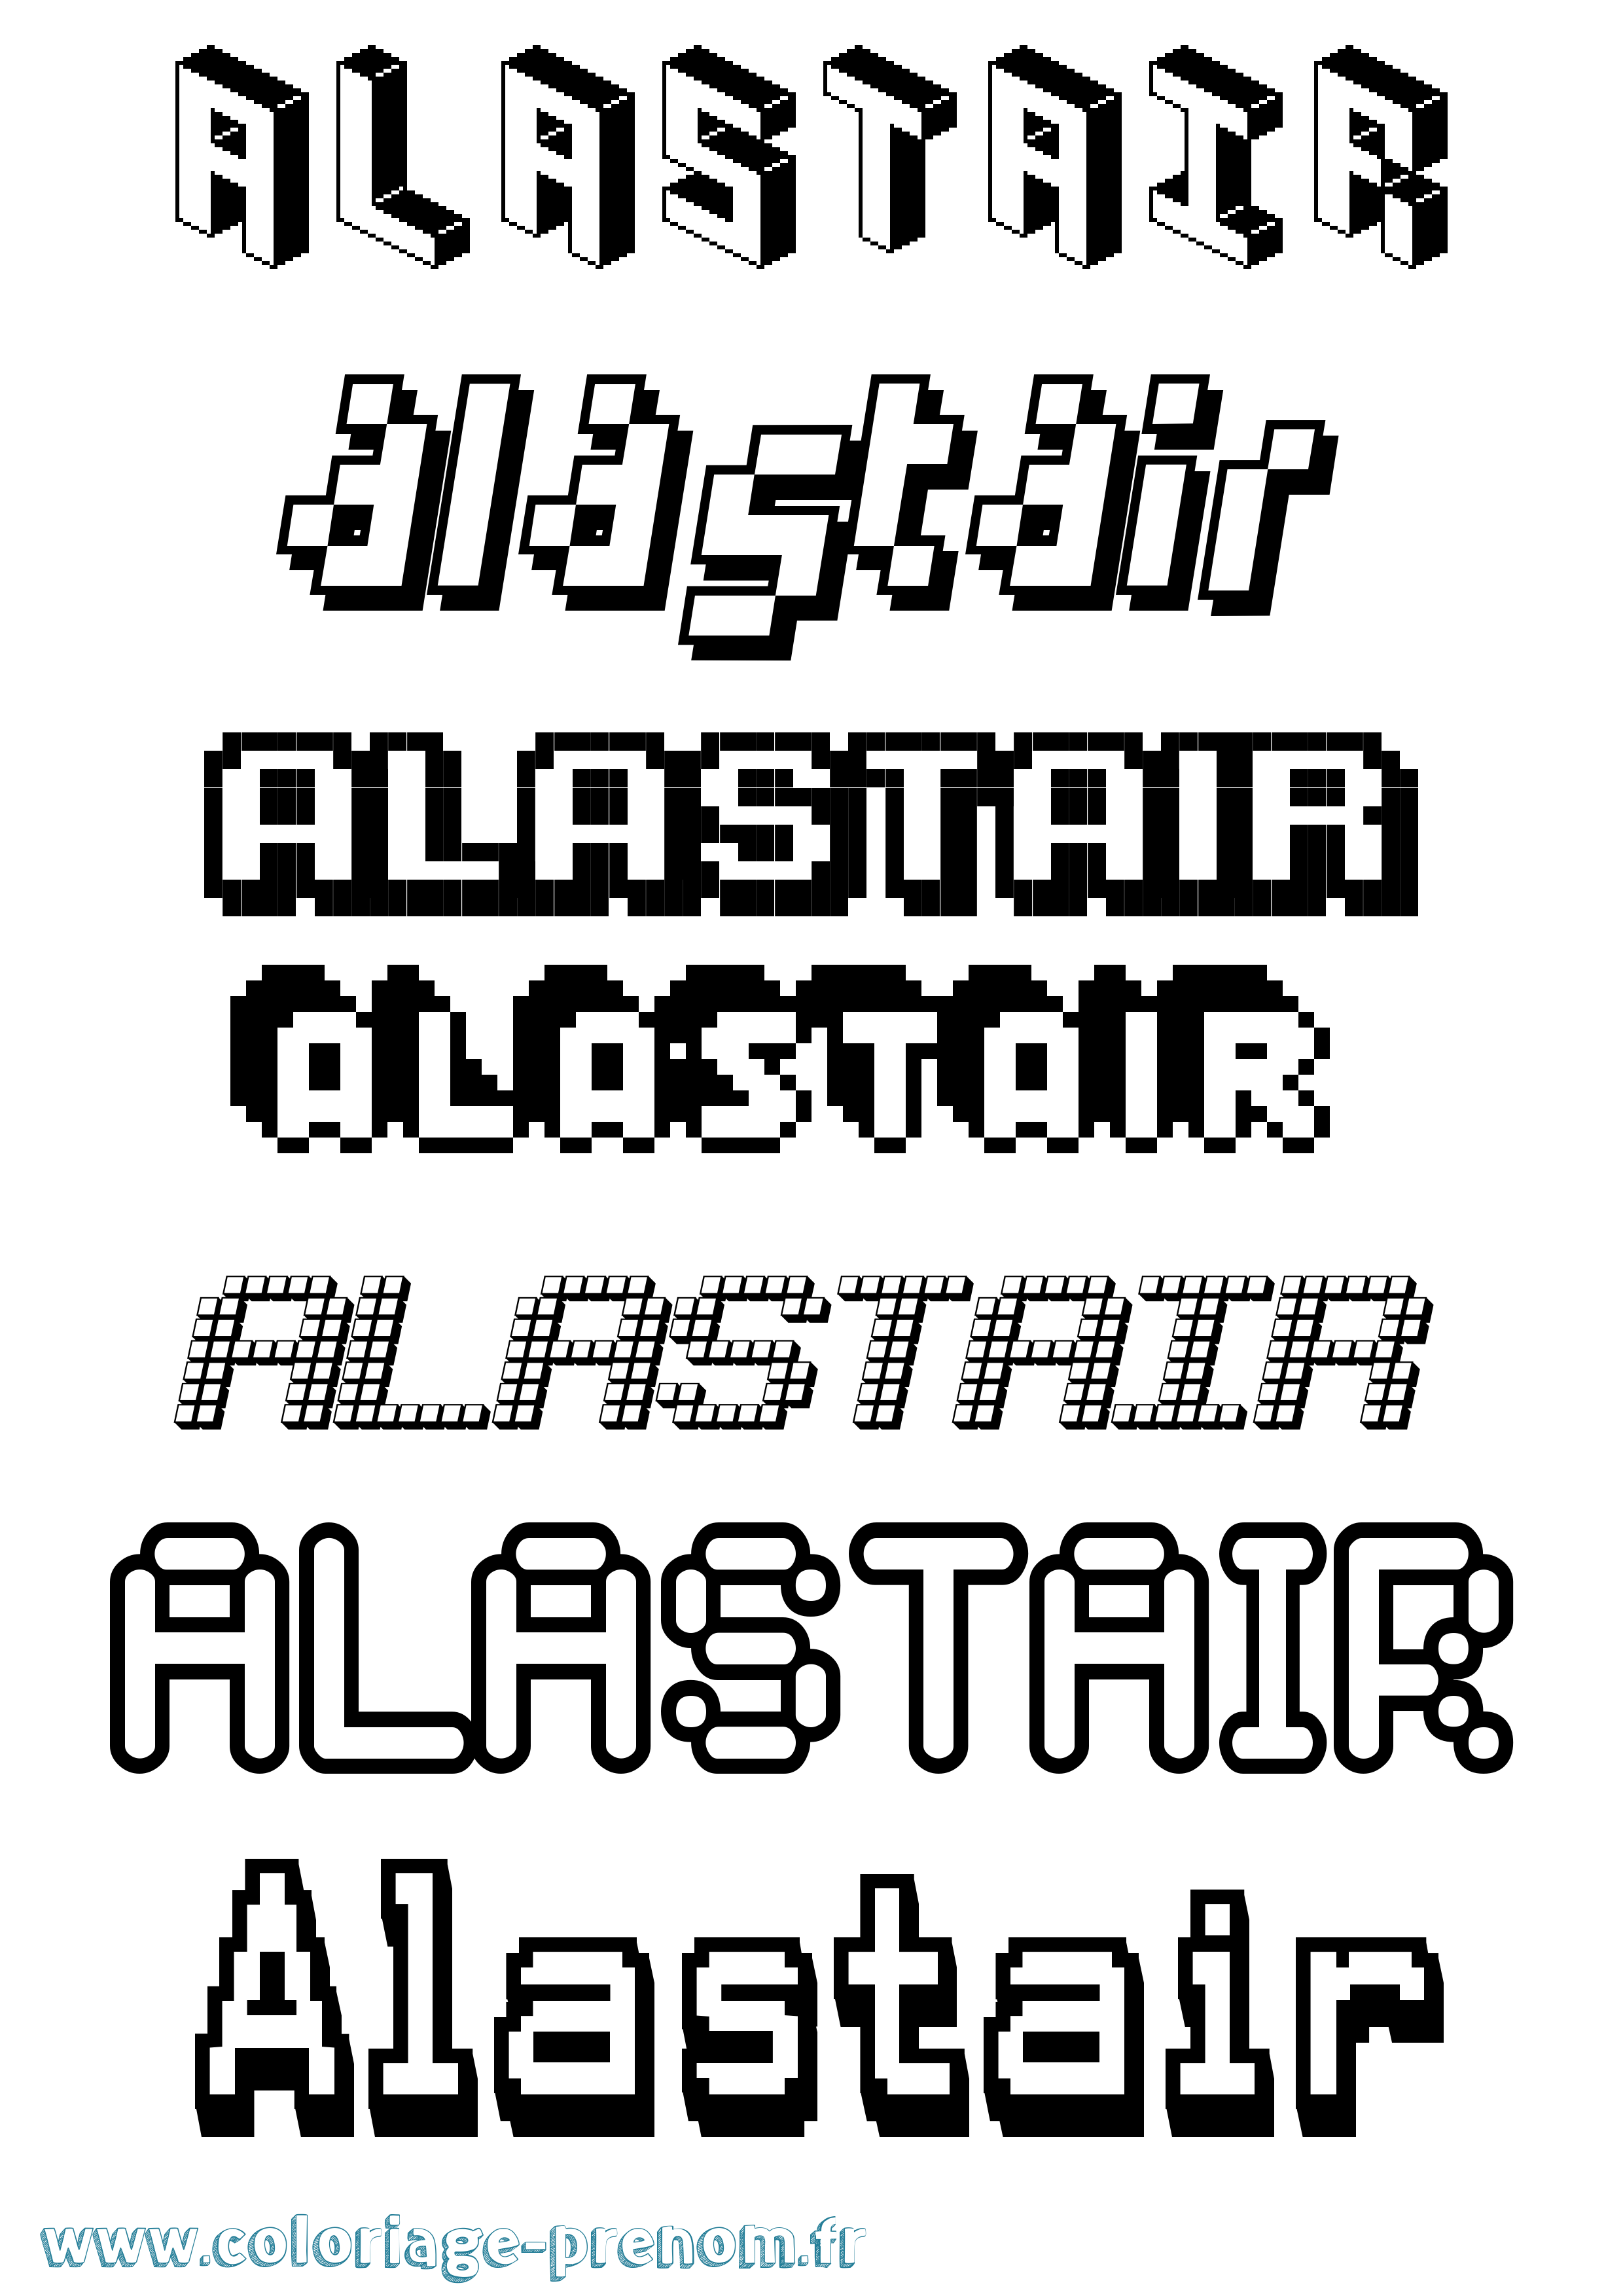 Coloriage prénom Alastair Pixel